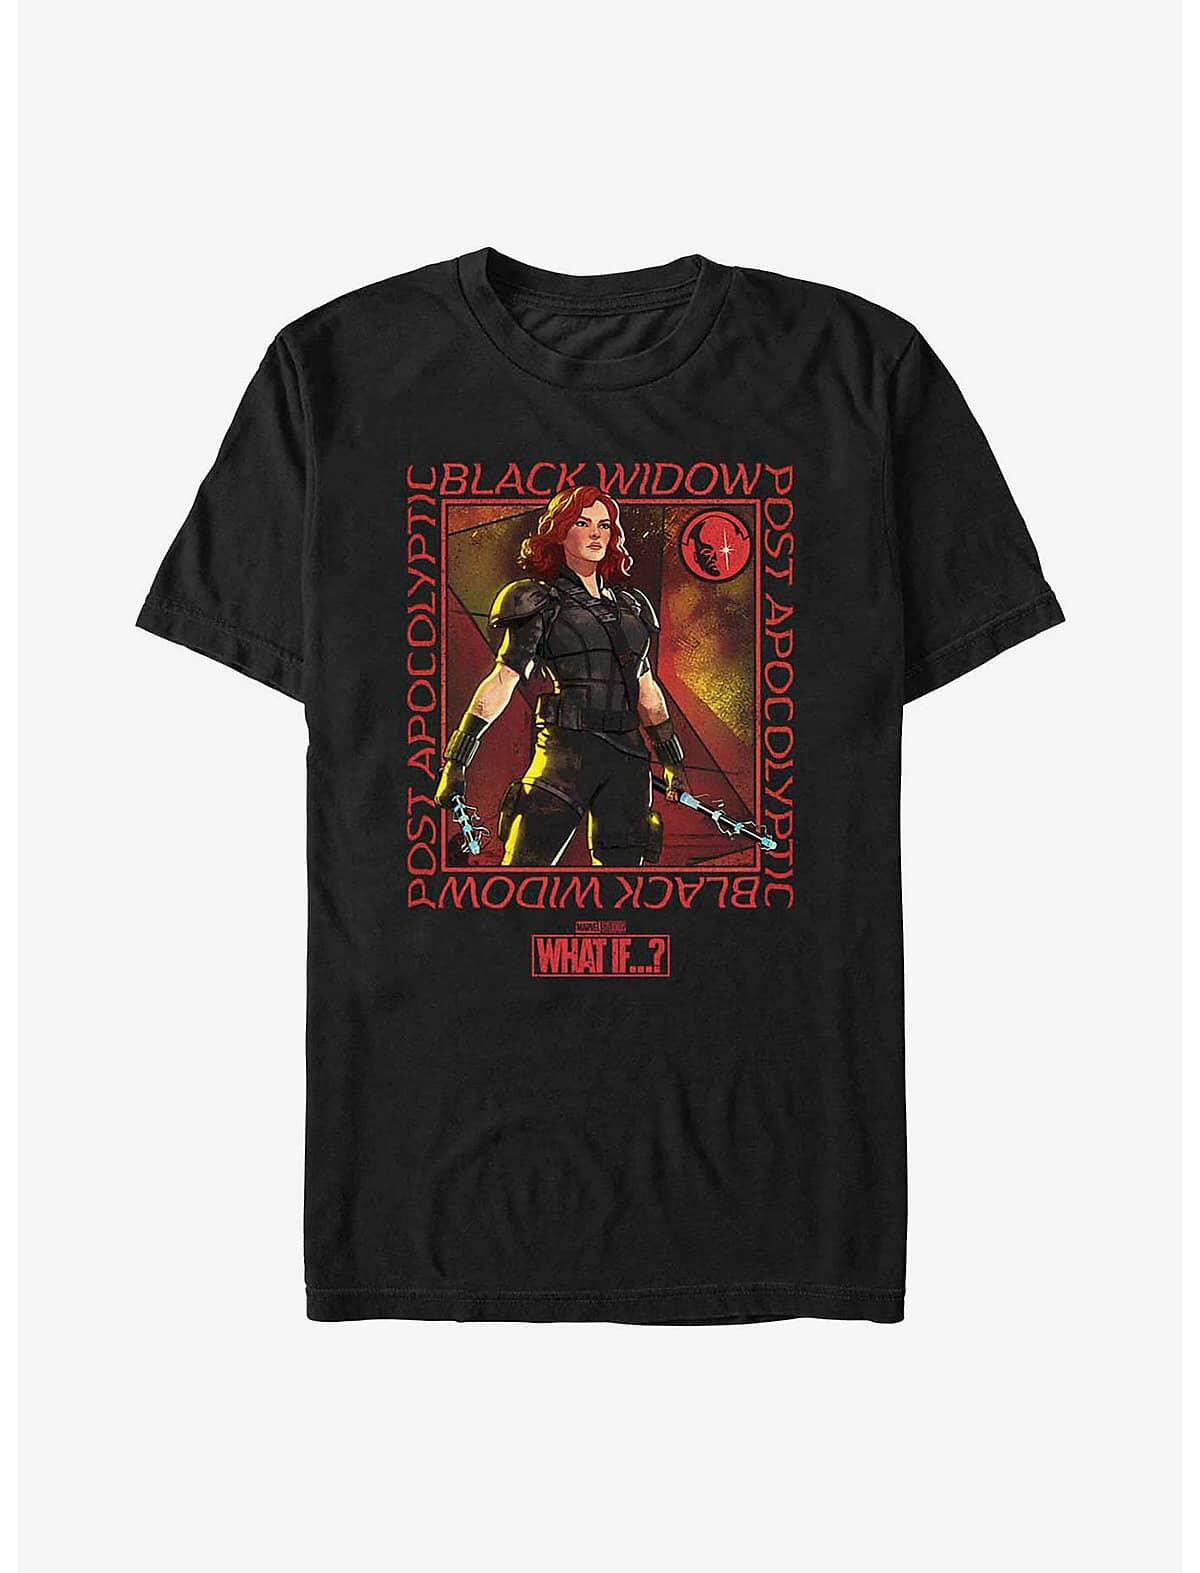 Post Apocolyptic Black Widow T-Shirt